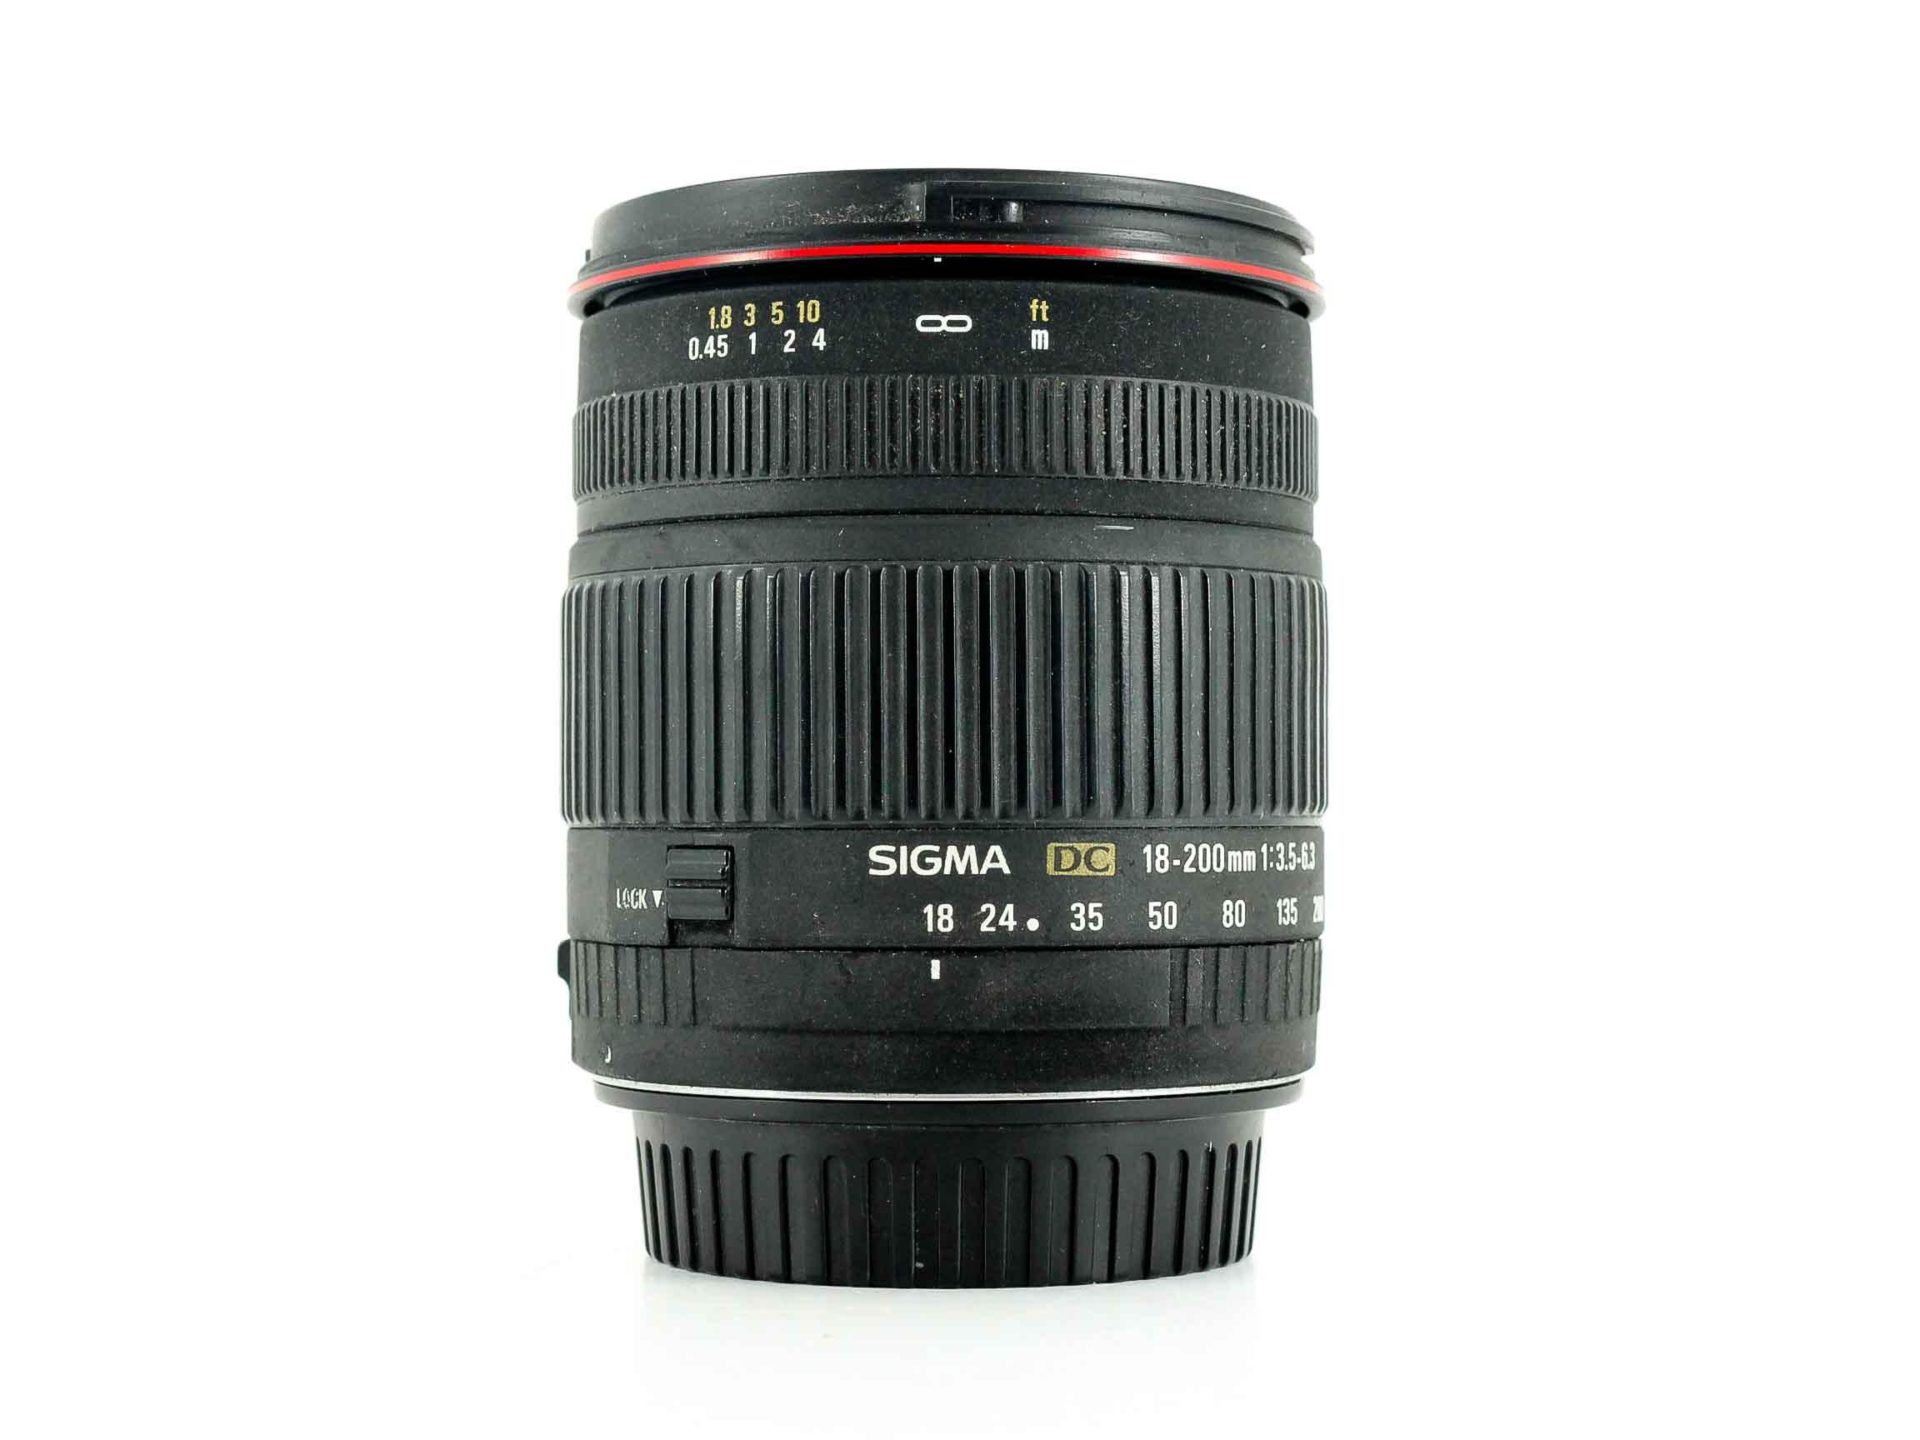 Sigma 18-200mm. Sigma 18-200. Sigma 18-200mm 1:3.5-6.3 вс os HSM Nikon.